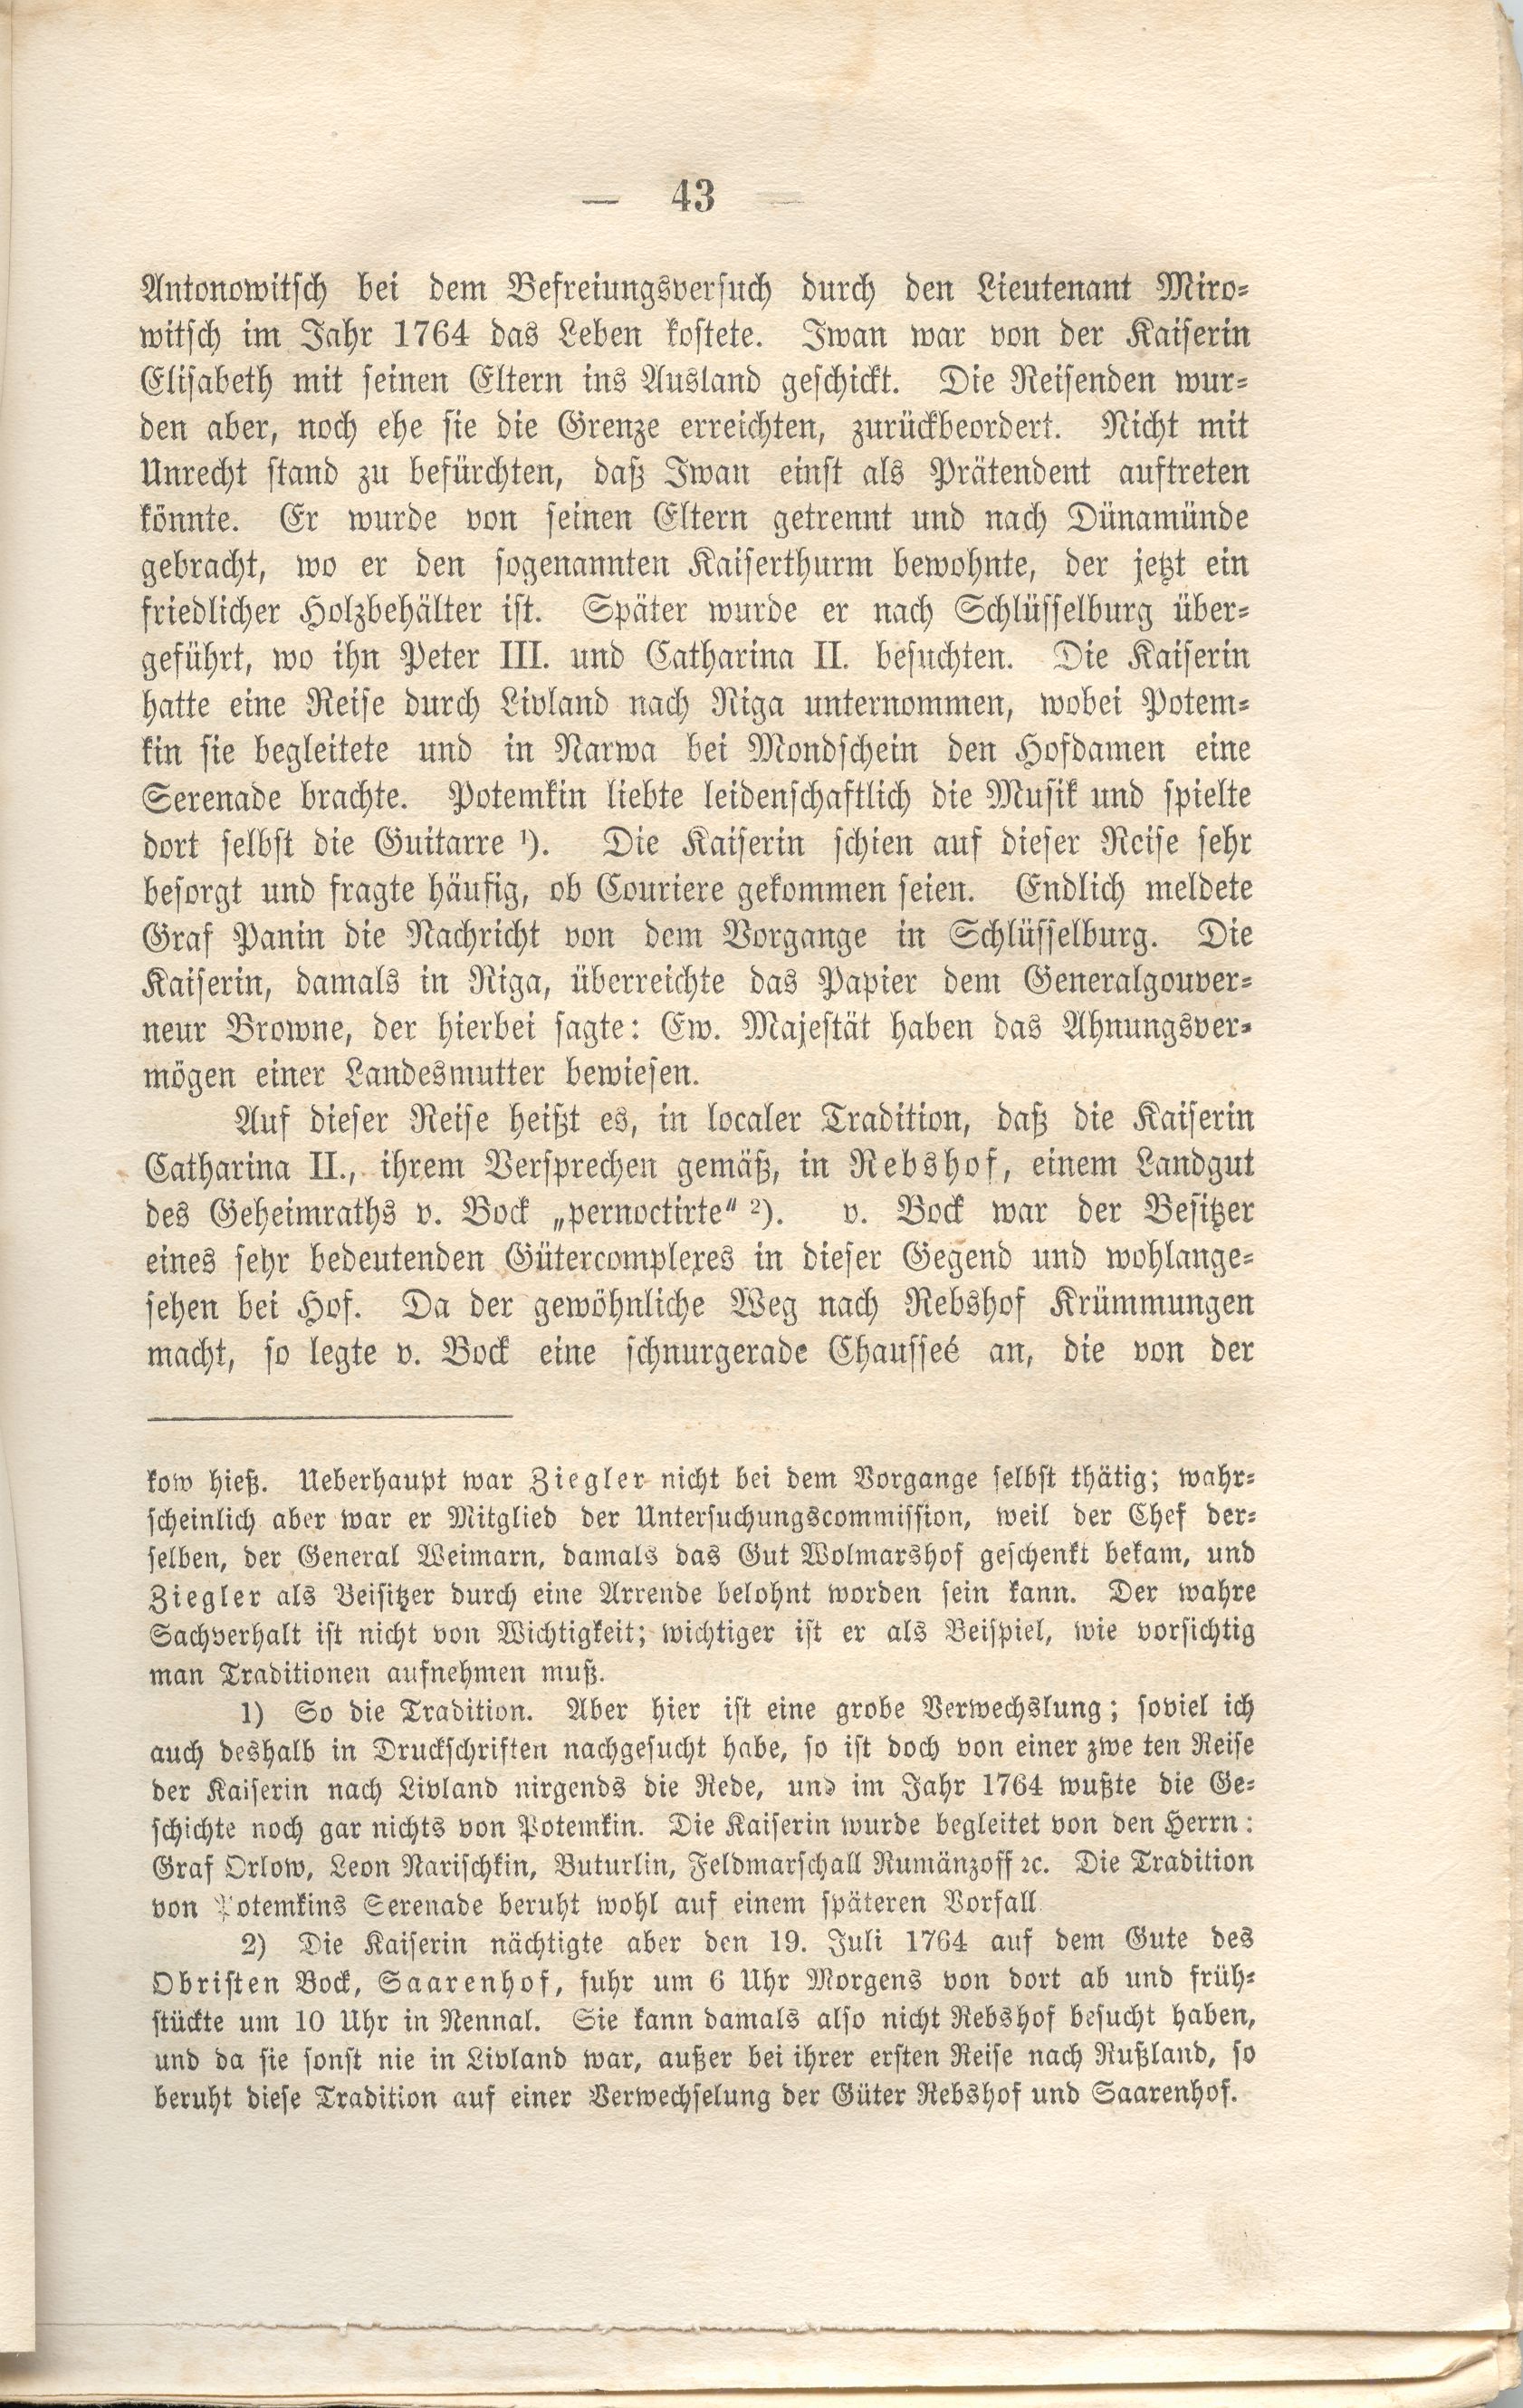 Wagien (1868) | 47. (43) Основной текст